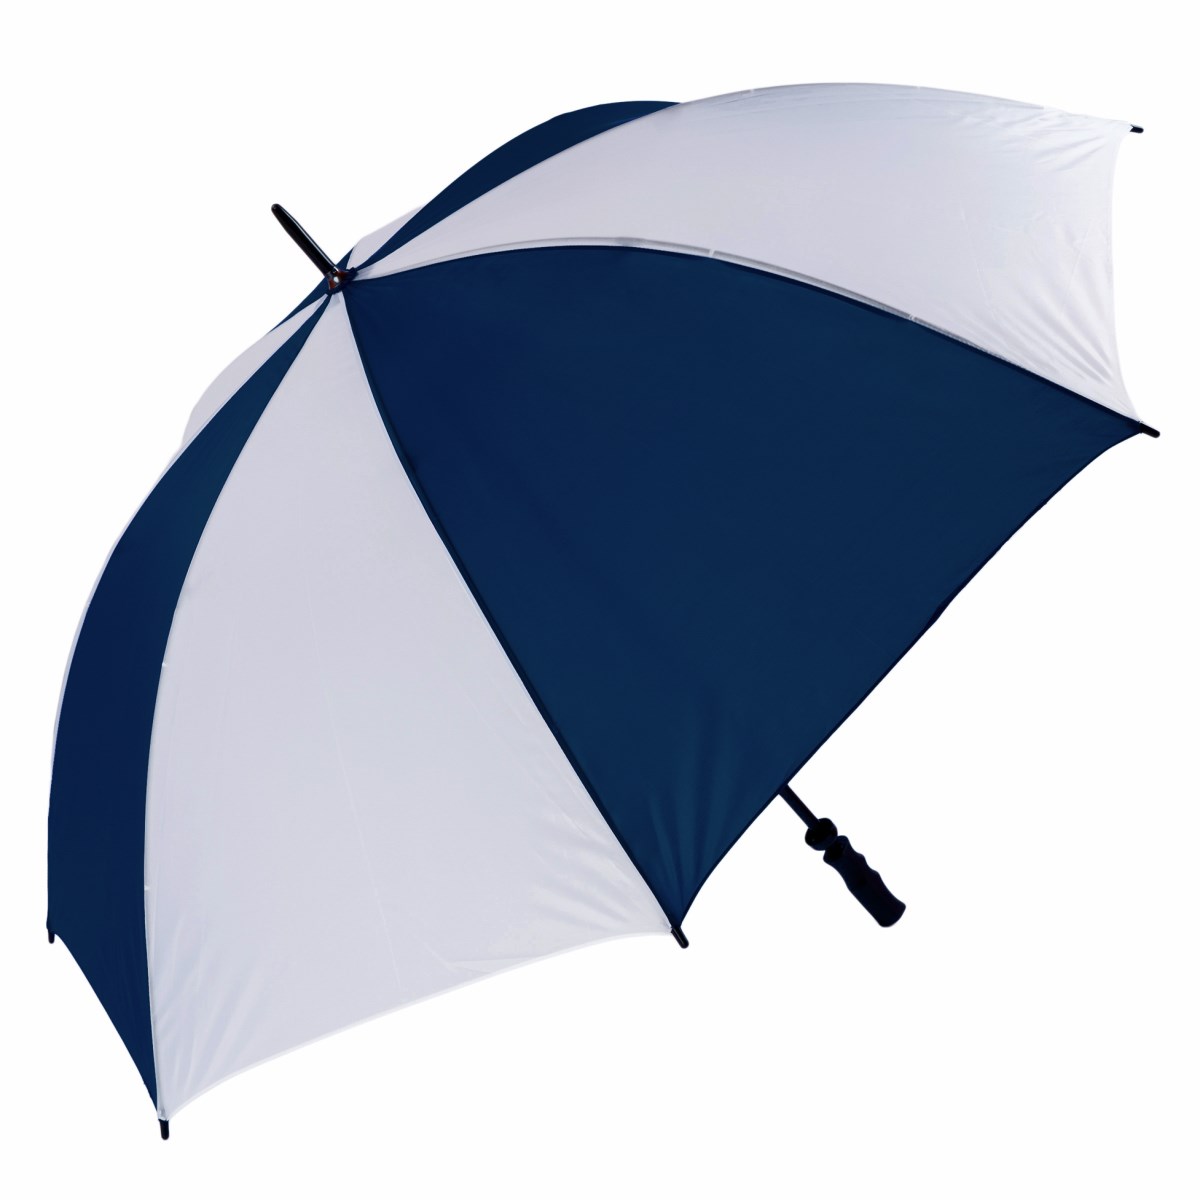 Wind Resistant Fibrelight Large Navy & White Golf Umbrella (3473)